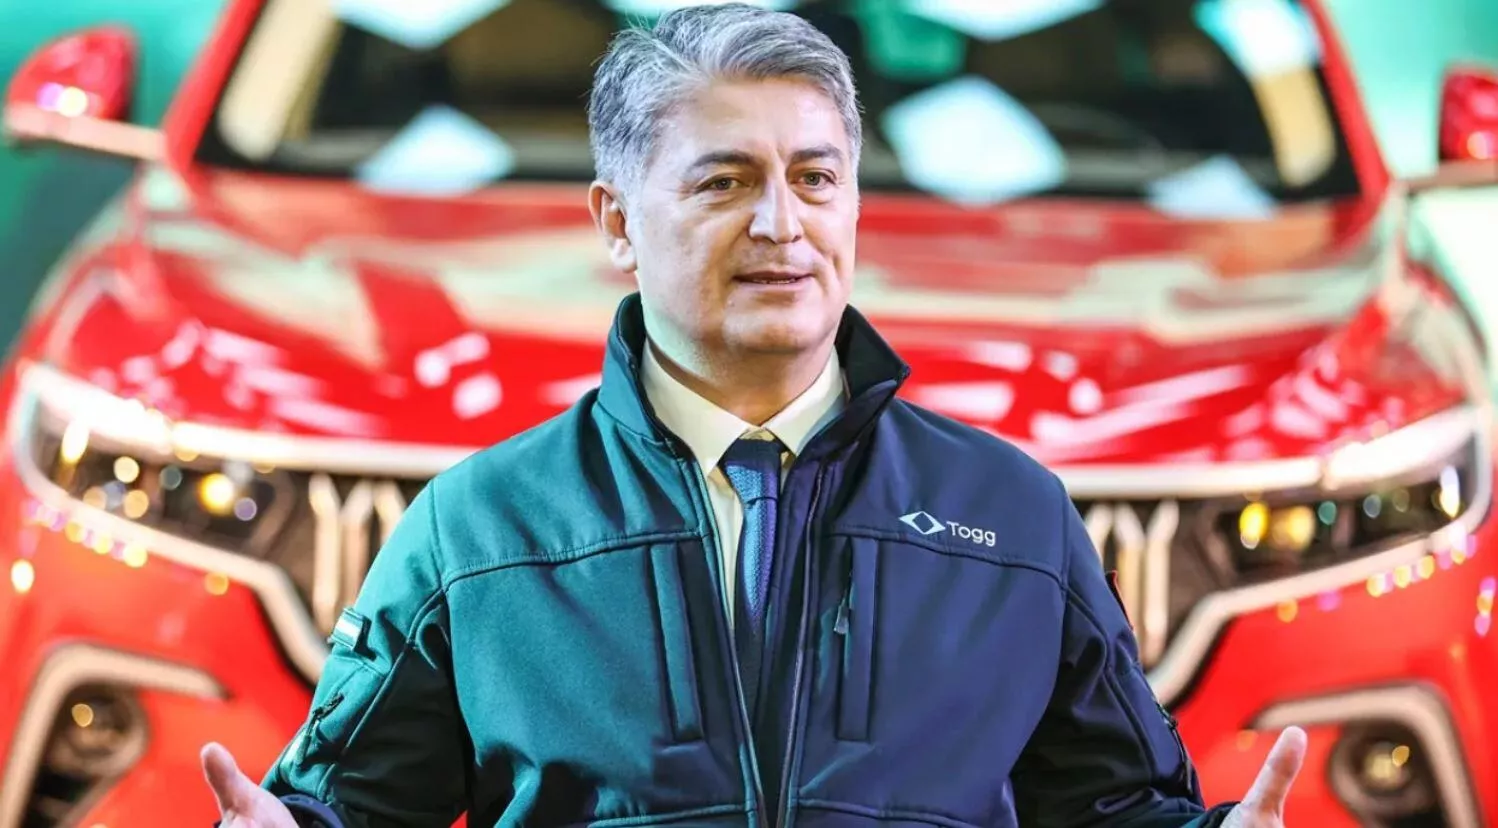 Togg CEO'su M. Gürcan Karakaş